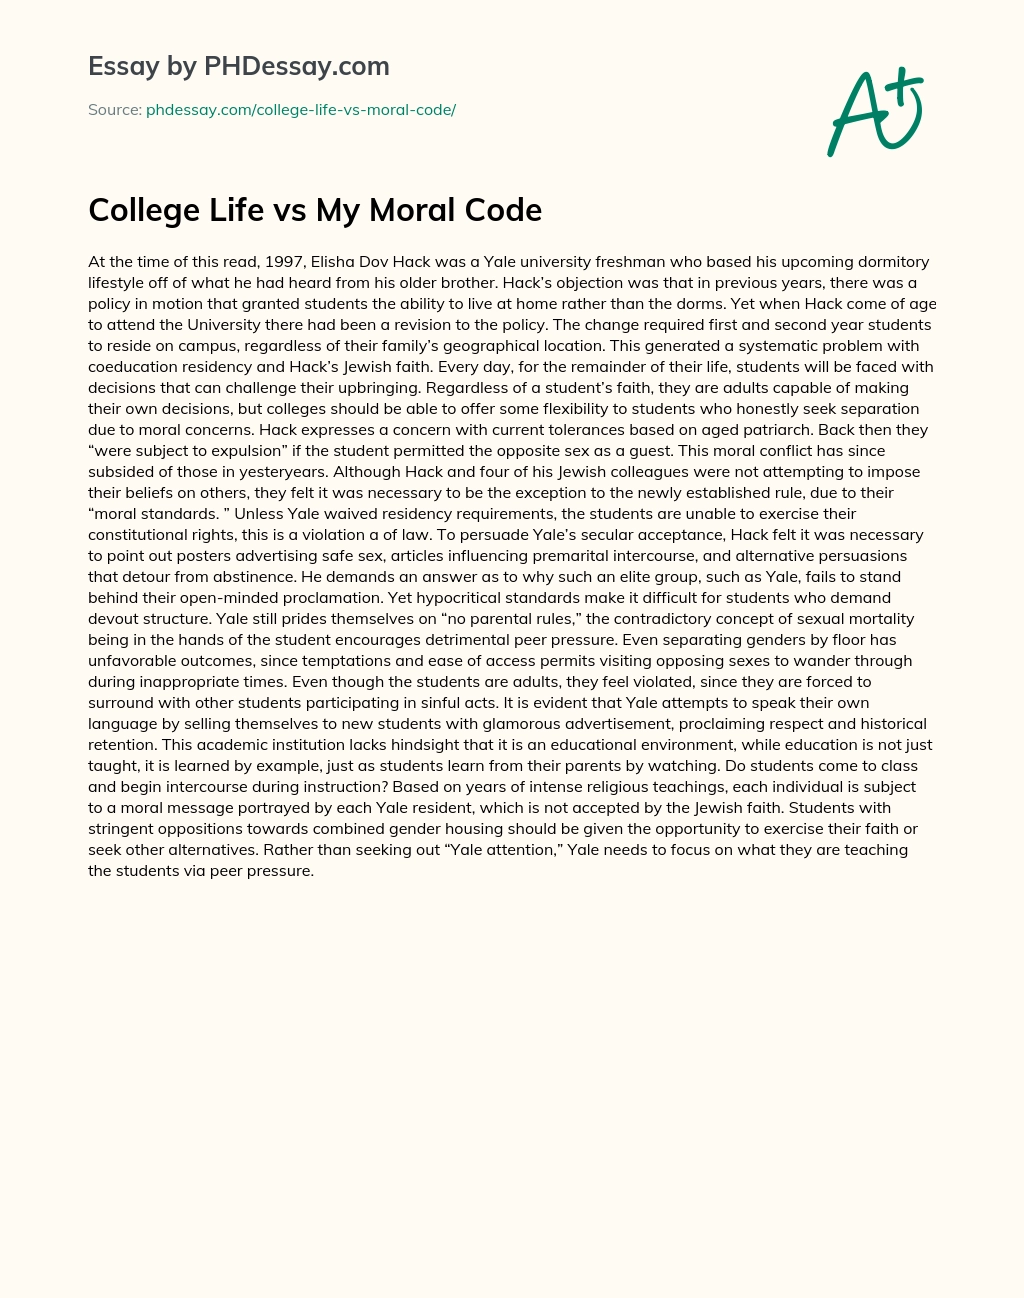 College Life vs My Moral Code essay